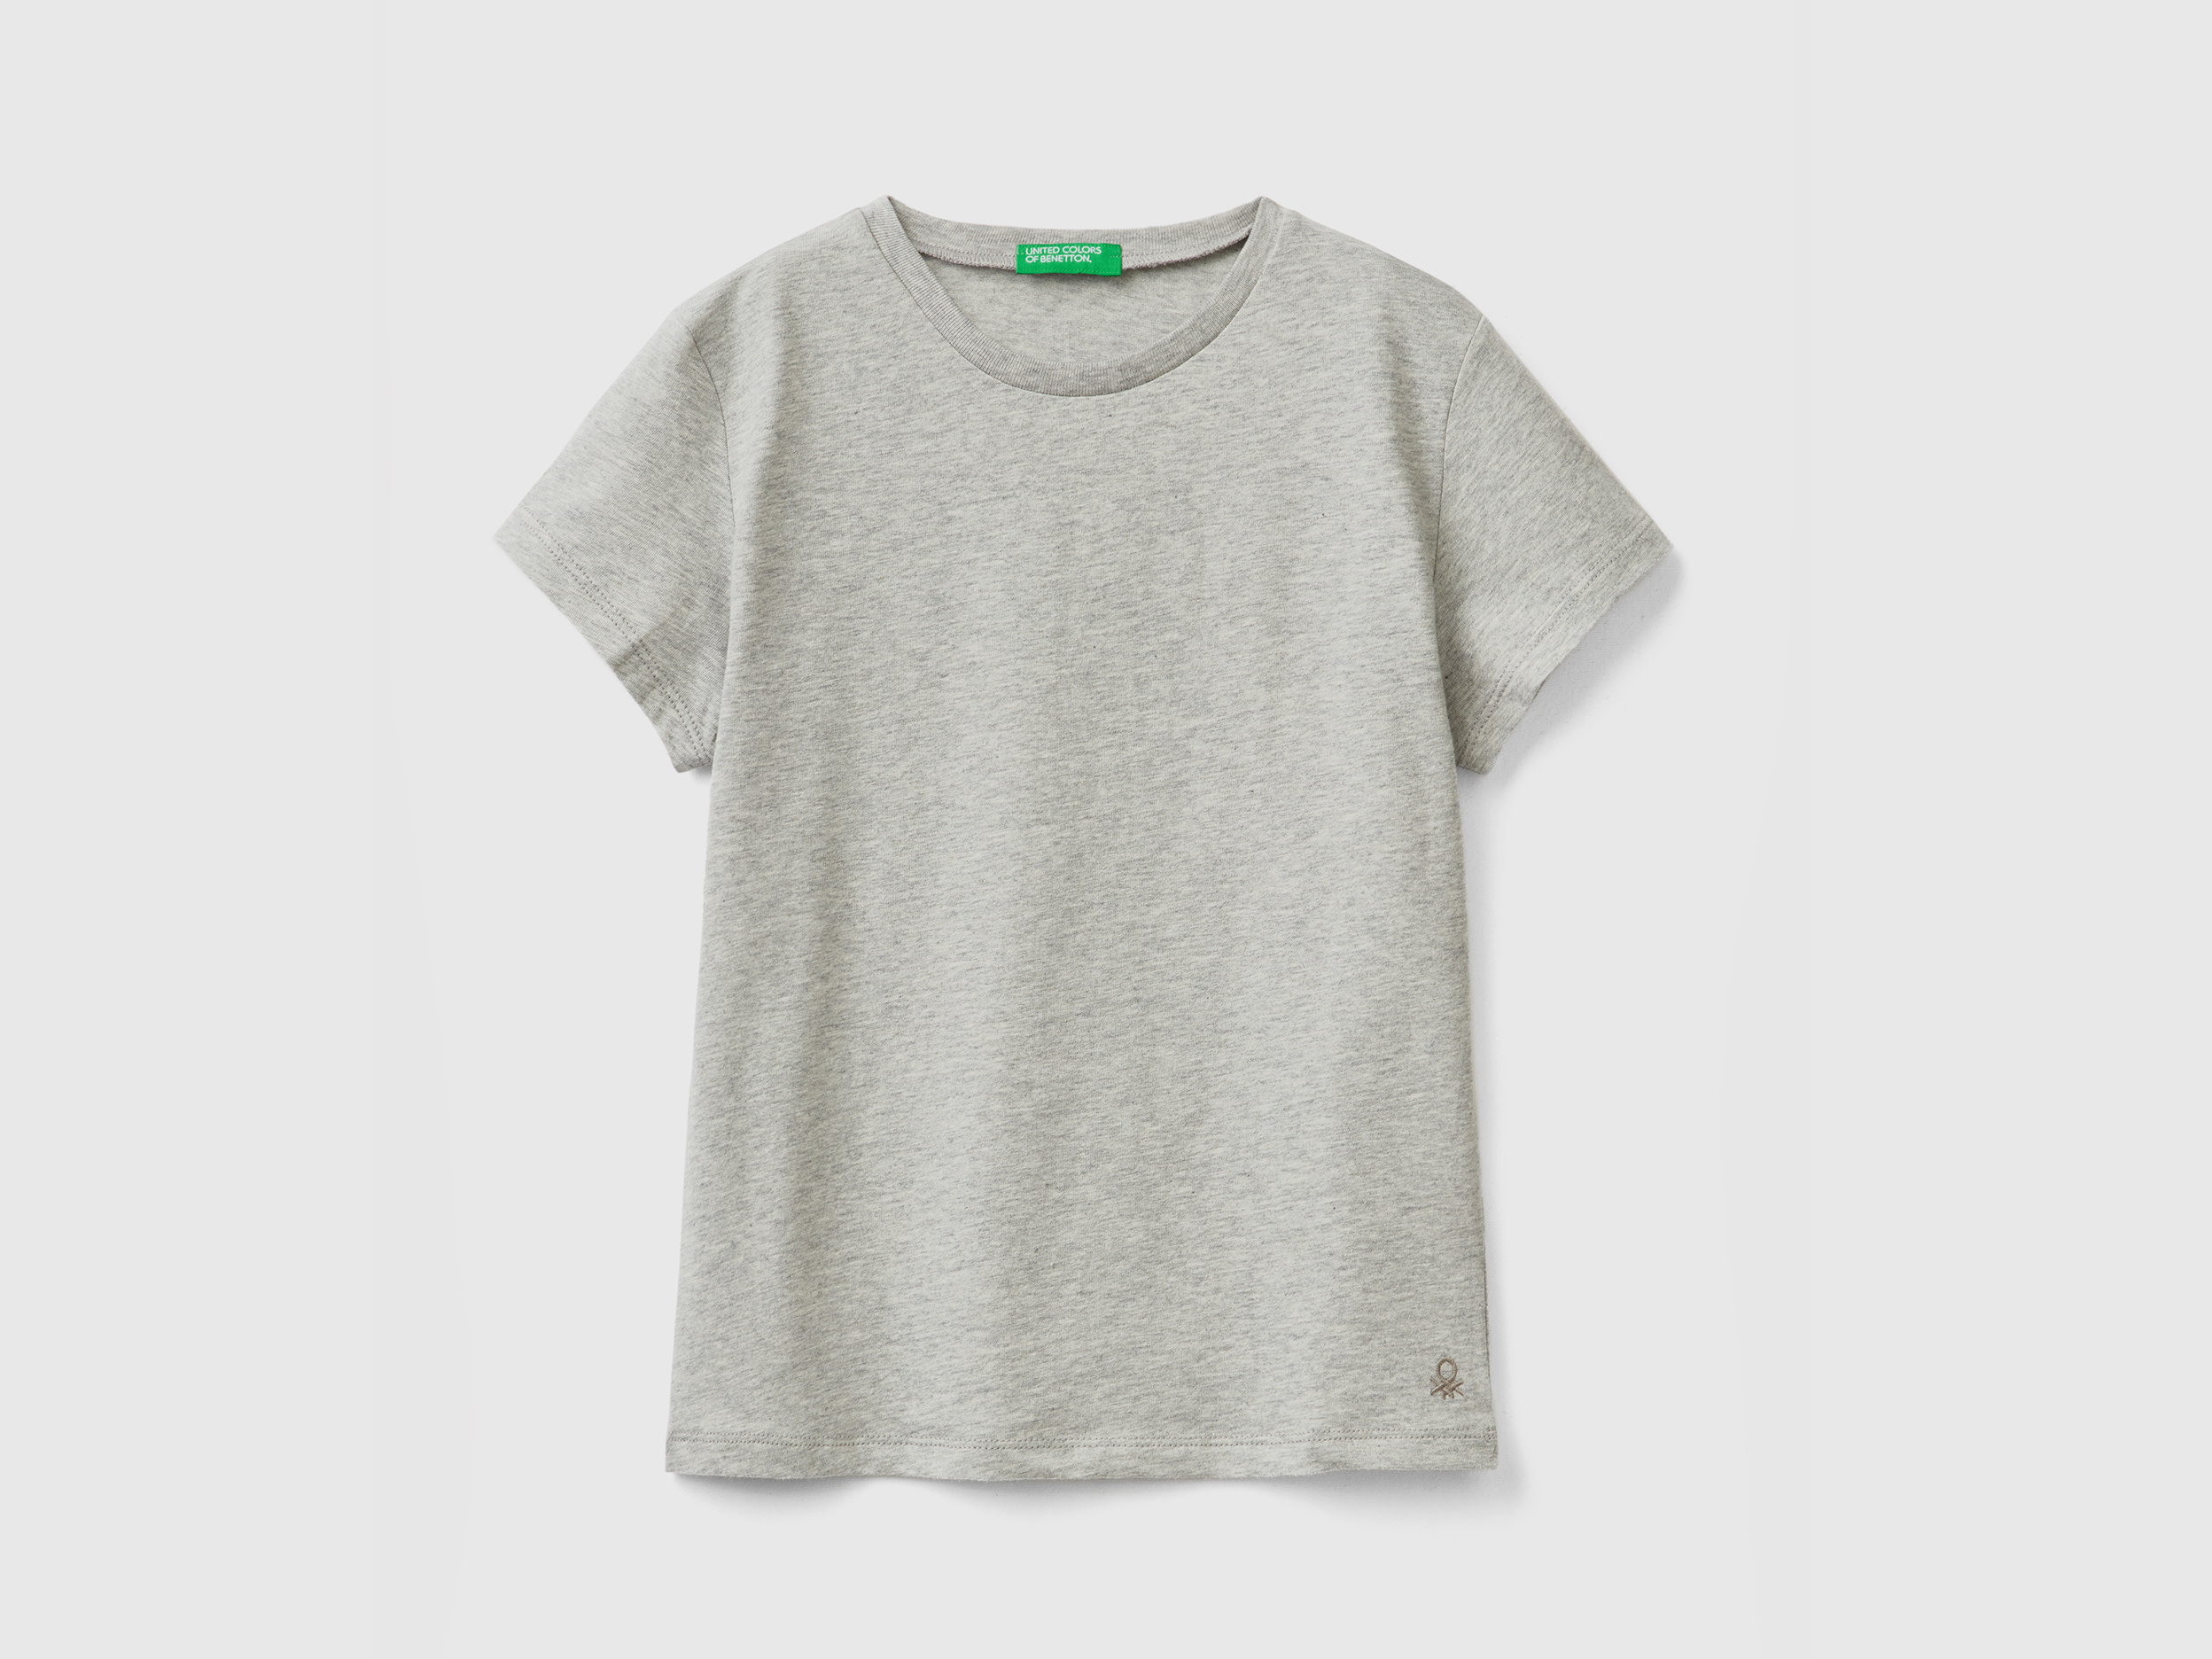 Benetton, T-shirt In Pure Organic Cotton, size XL, Light Gray, Kids